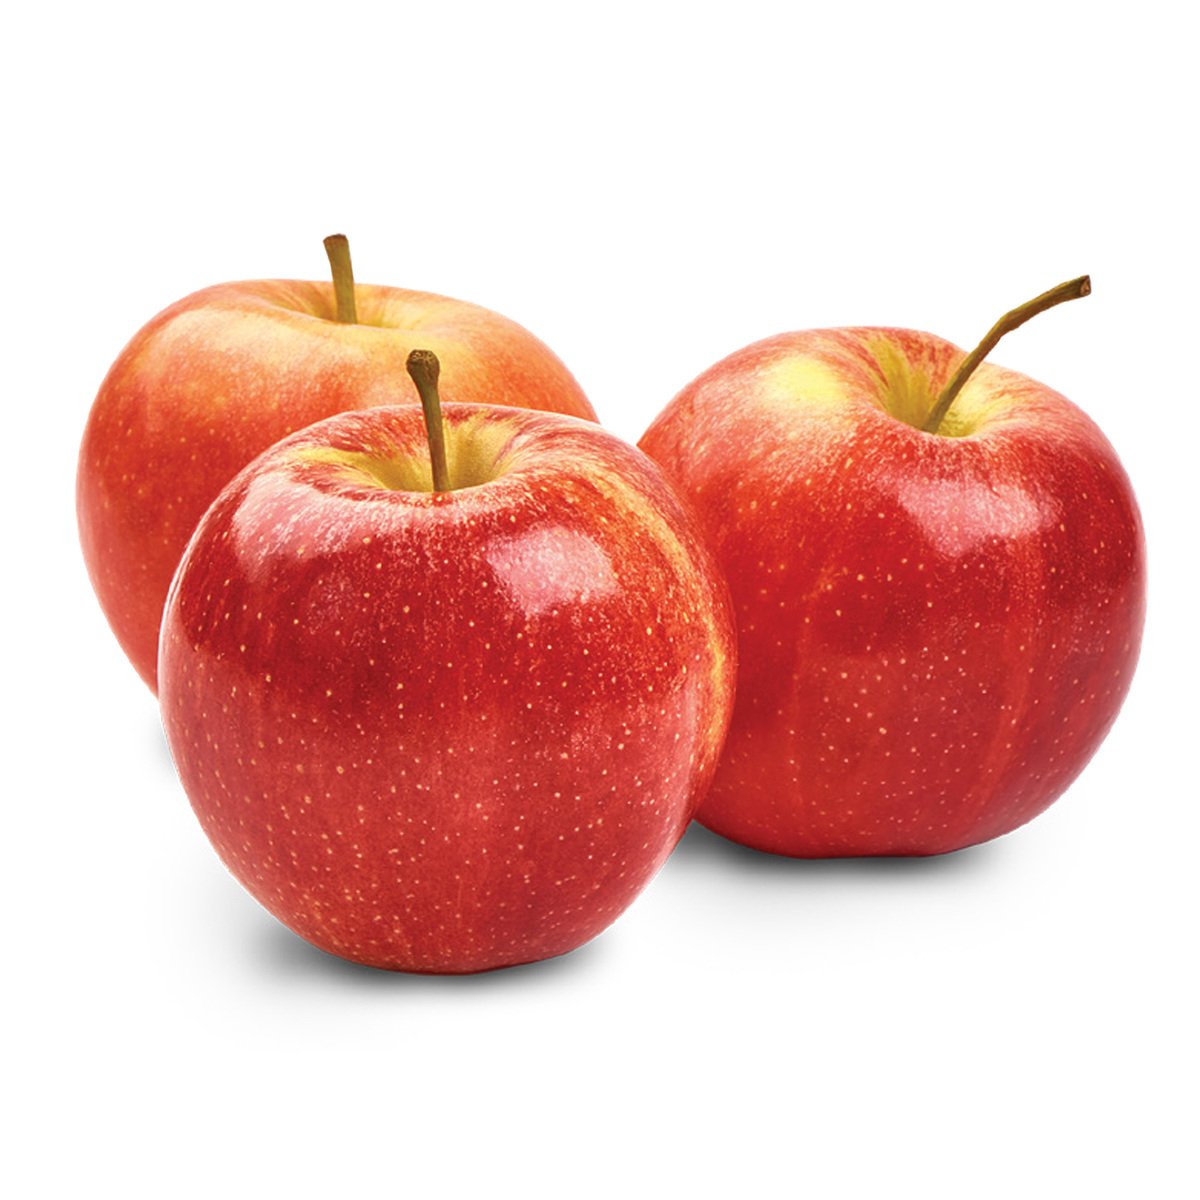 تفاح أحمر إيراني 1 كجم وزن تقريبي